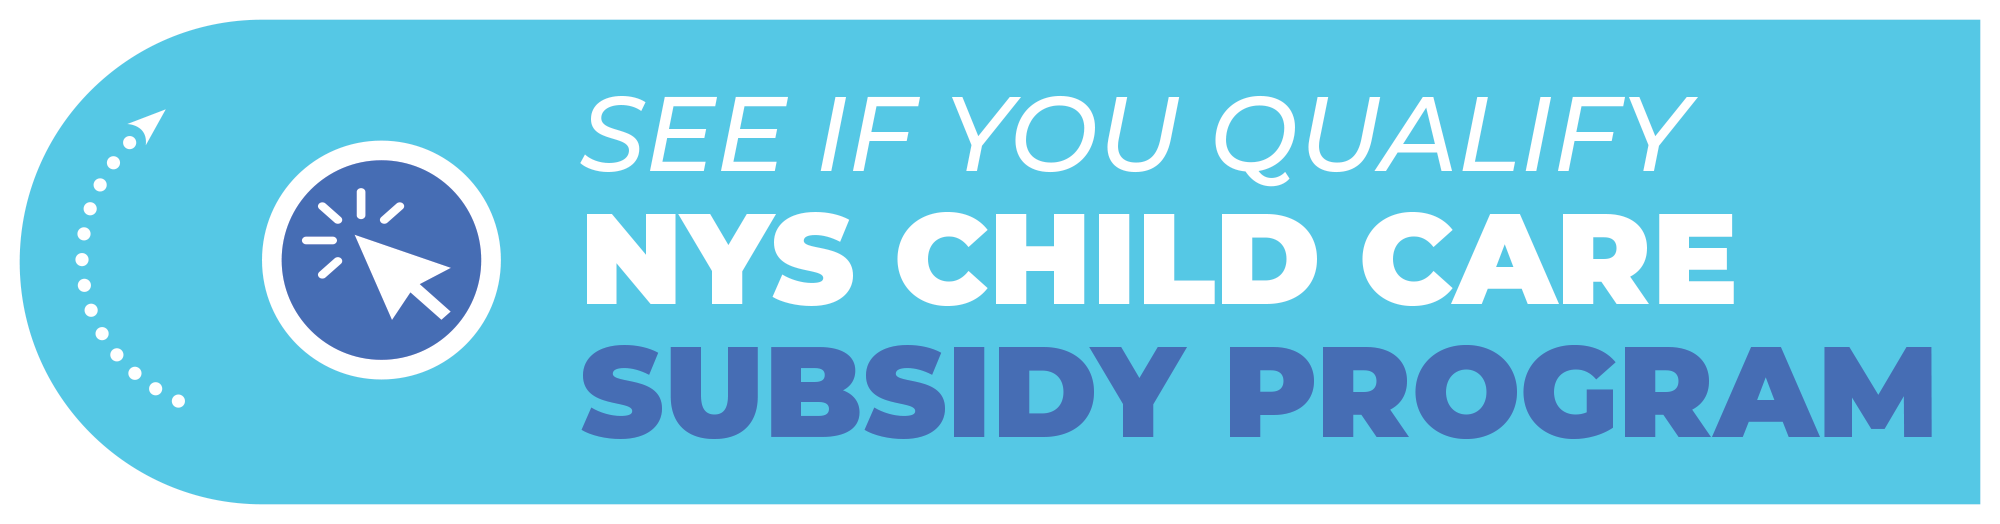 NYS Child Care Subsidy Program